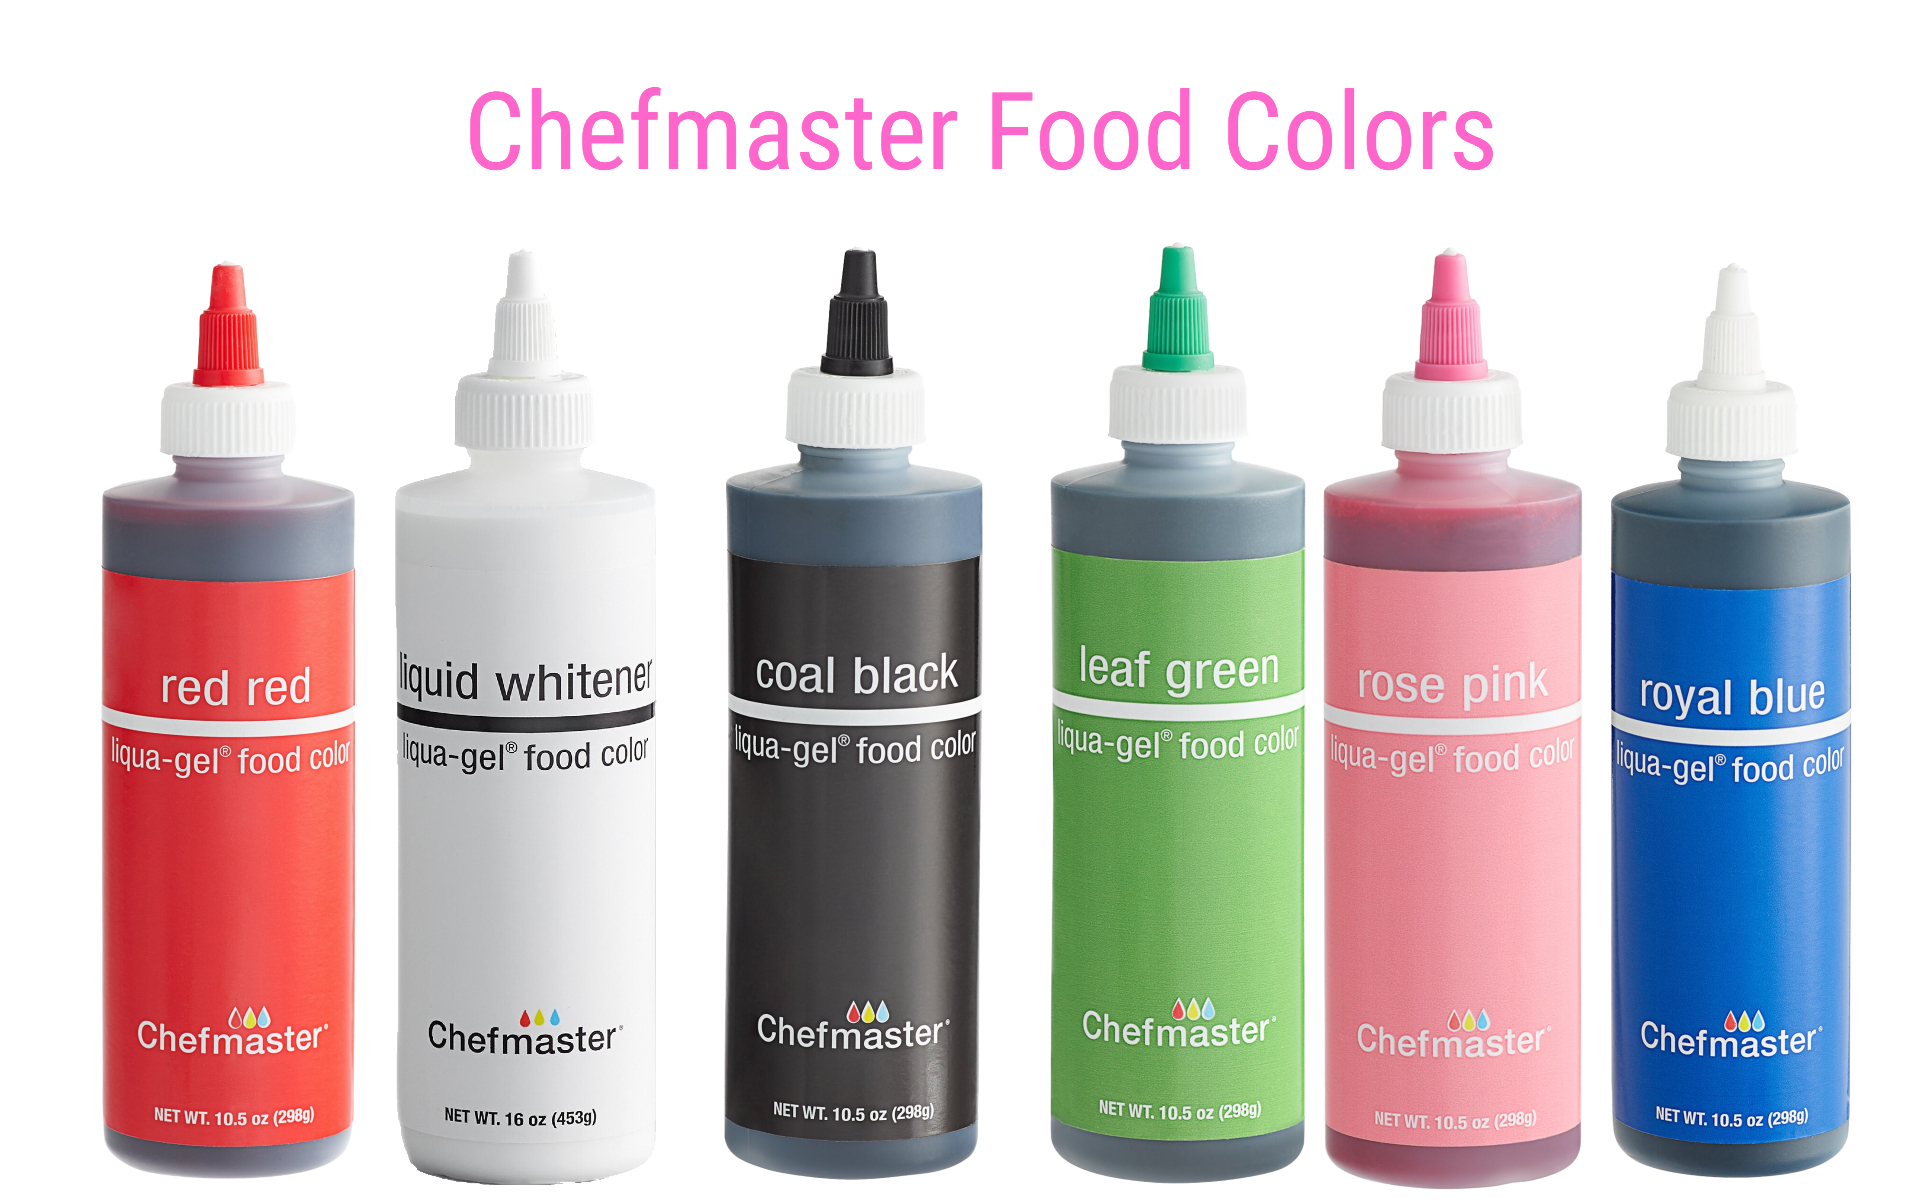 Chefmaster Food Colors